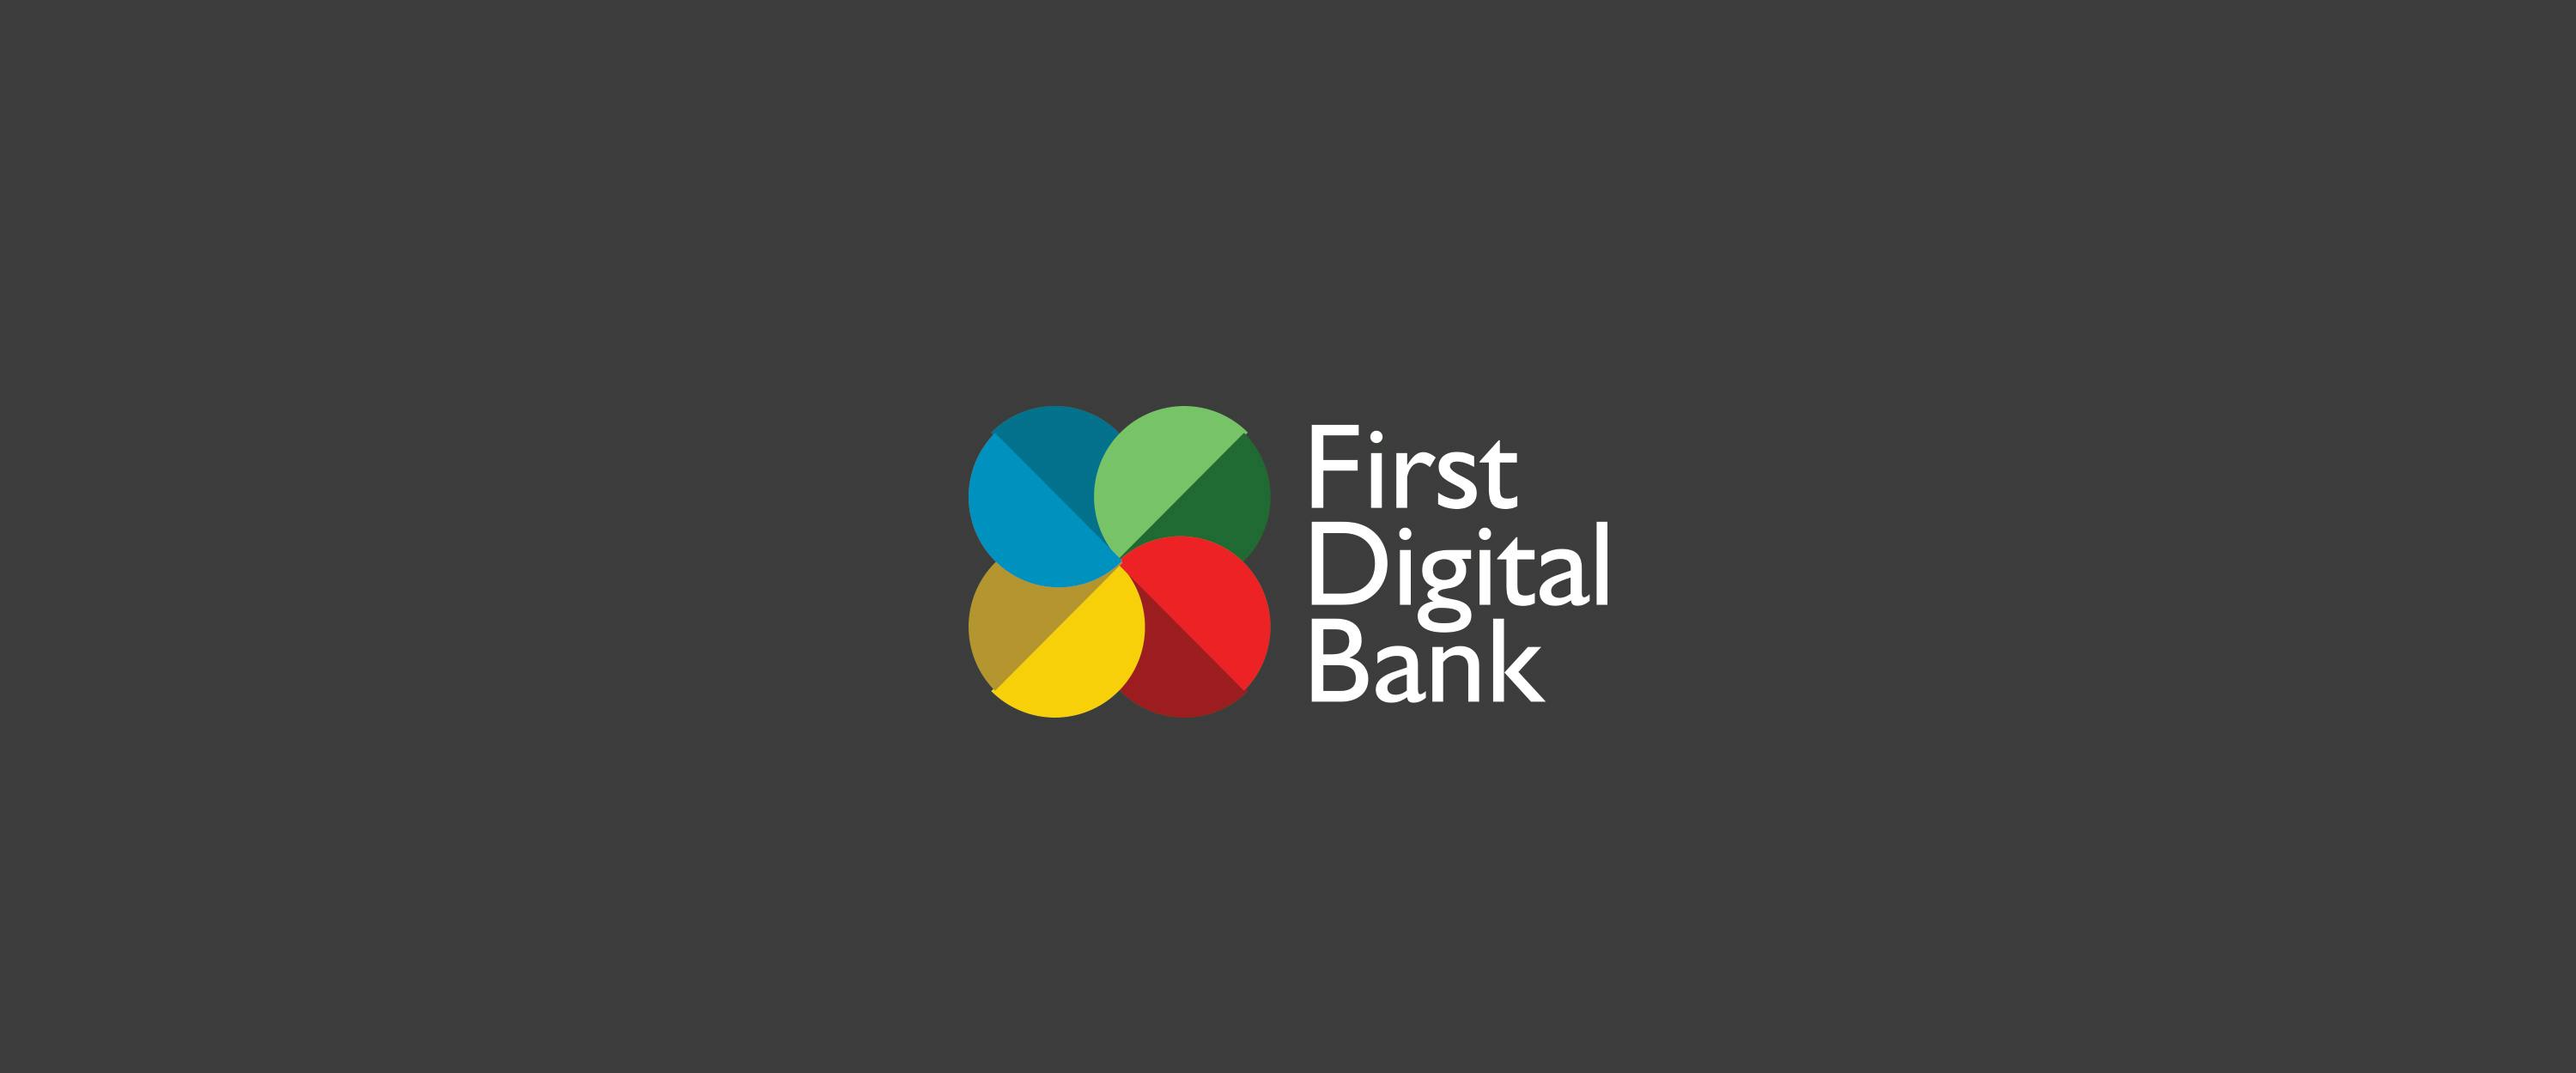 First Digital Bank